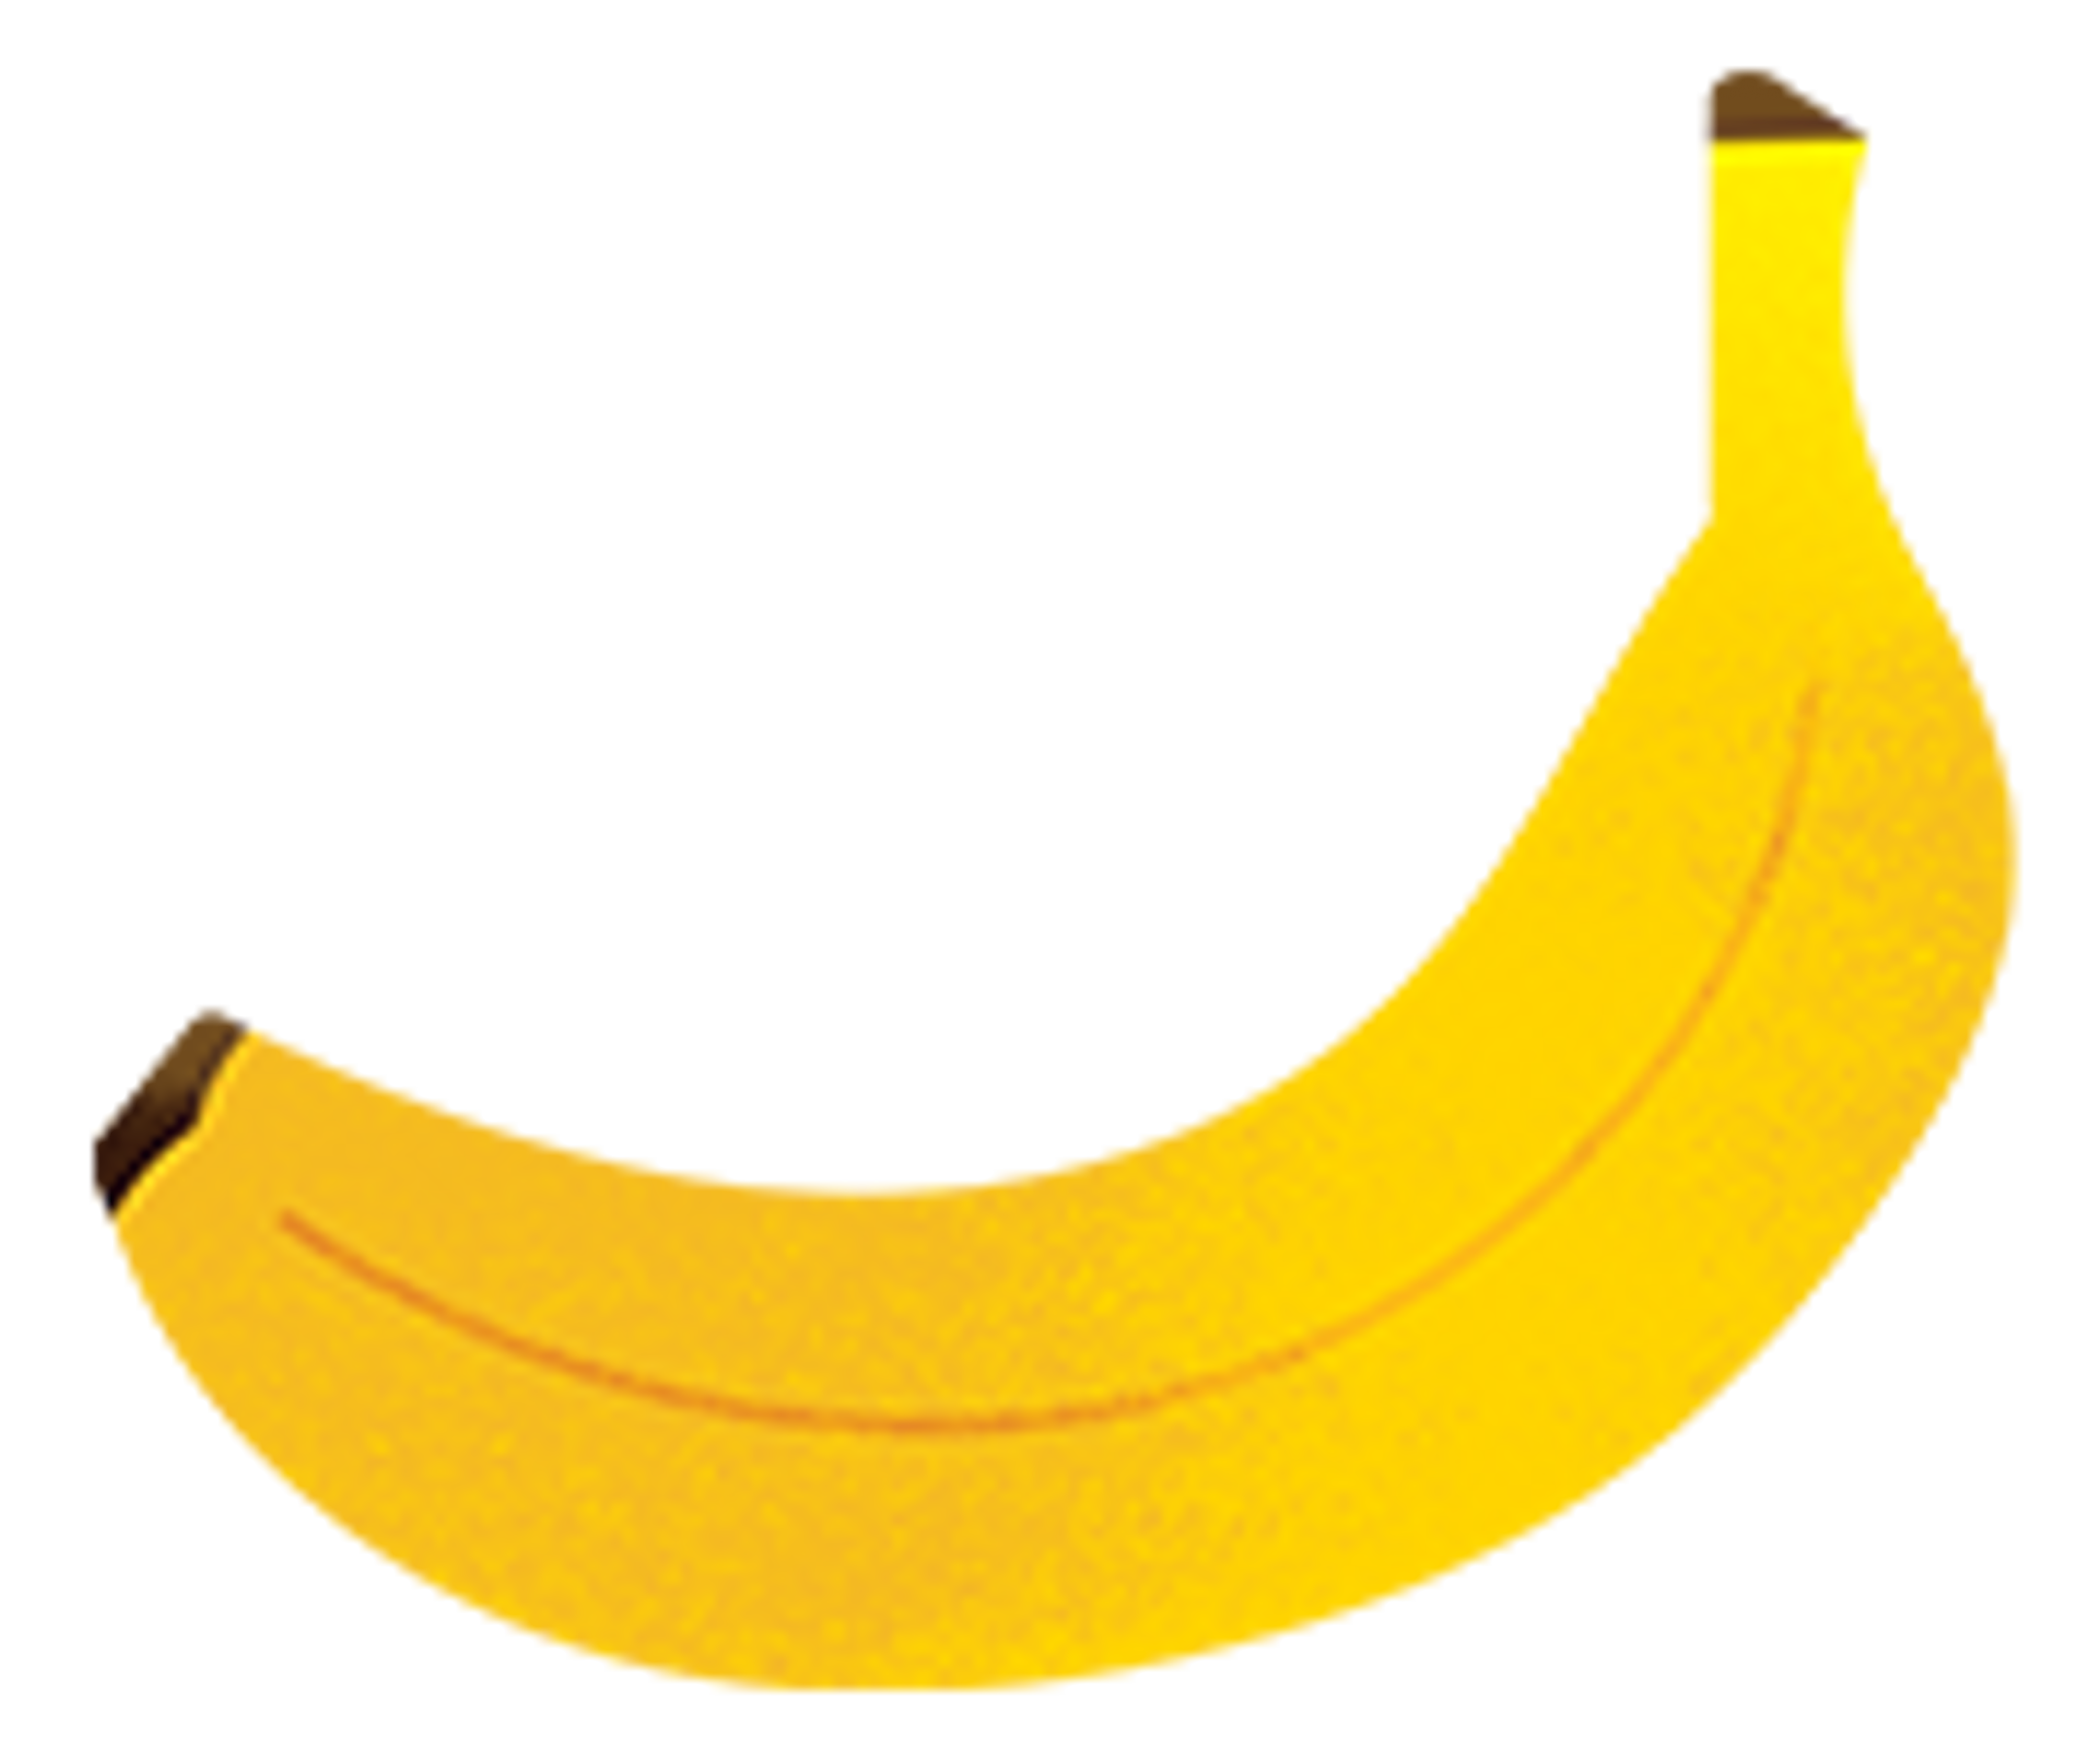 Organic Banana